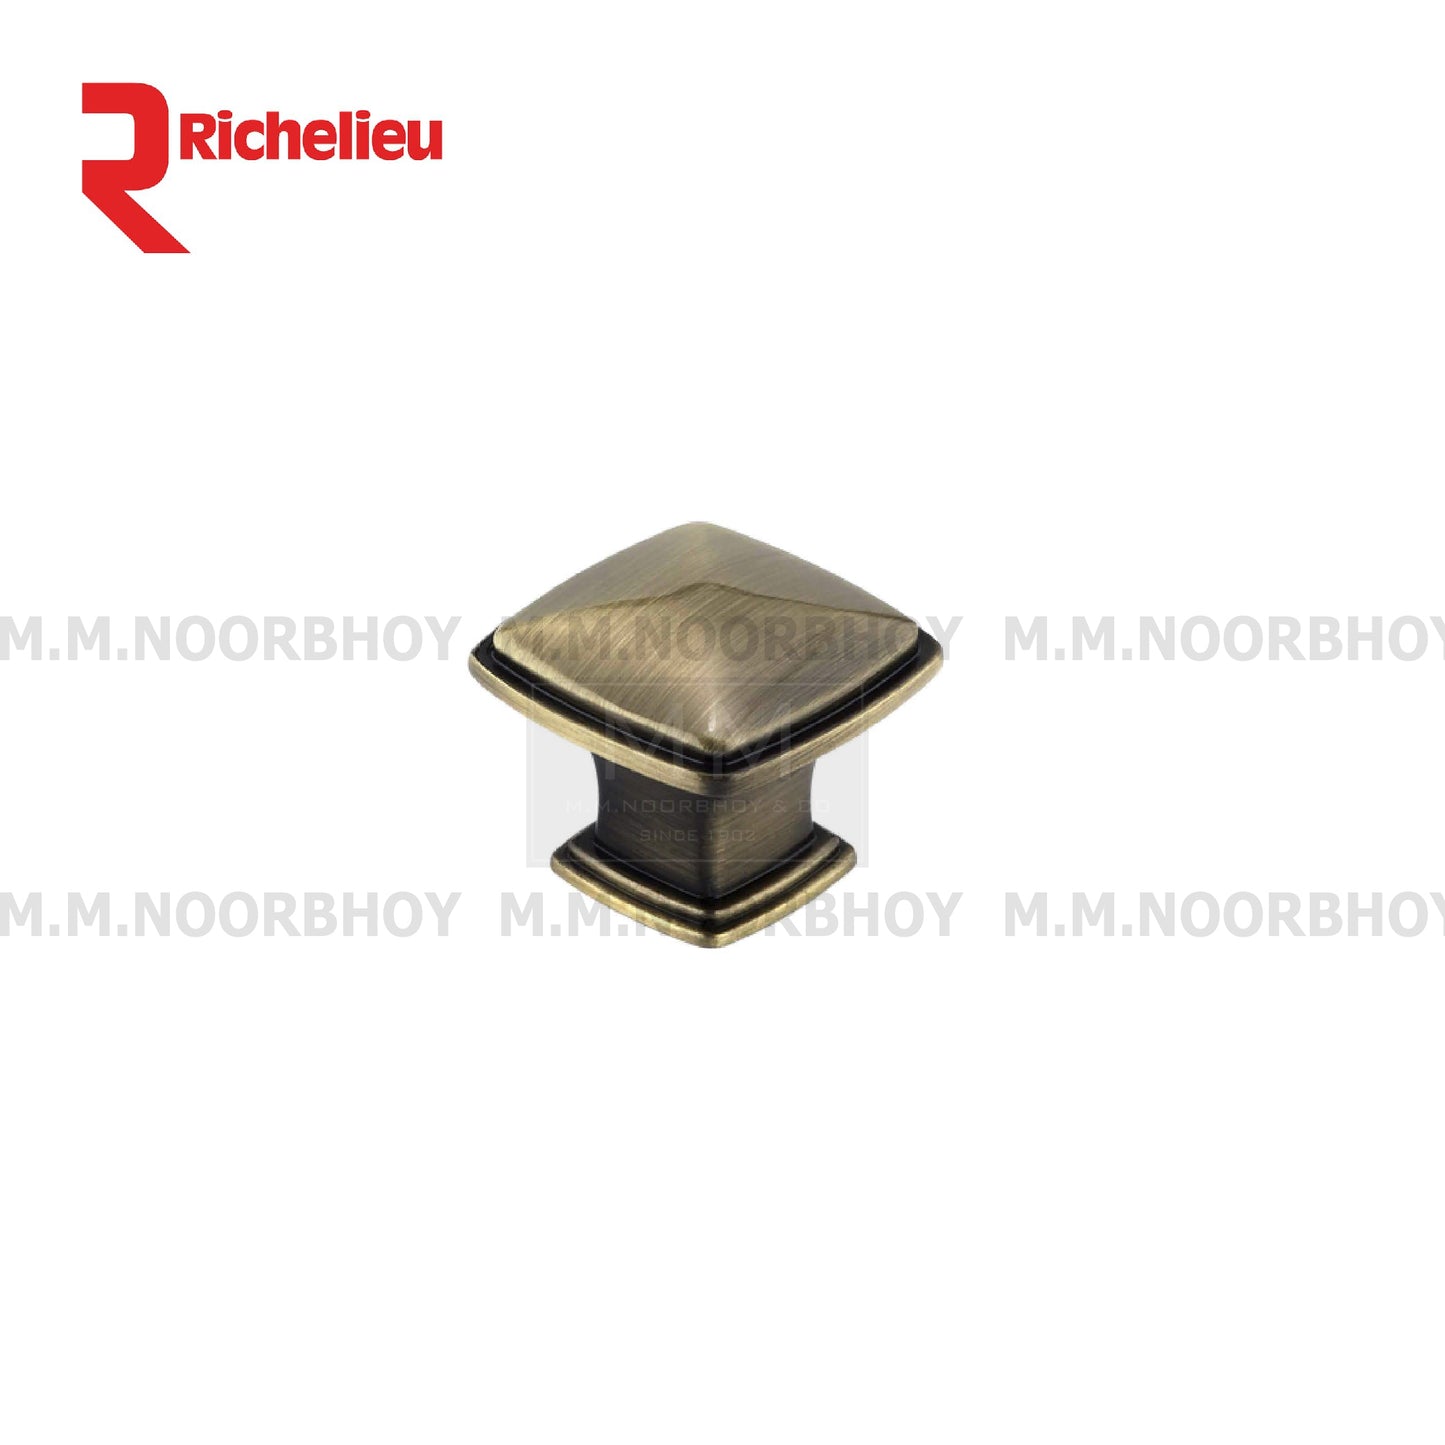 Richelieu Antique English Color Cabinet Knob (1.0x1.22x1.22 in) Each - RHCB19000AE